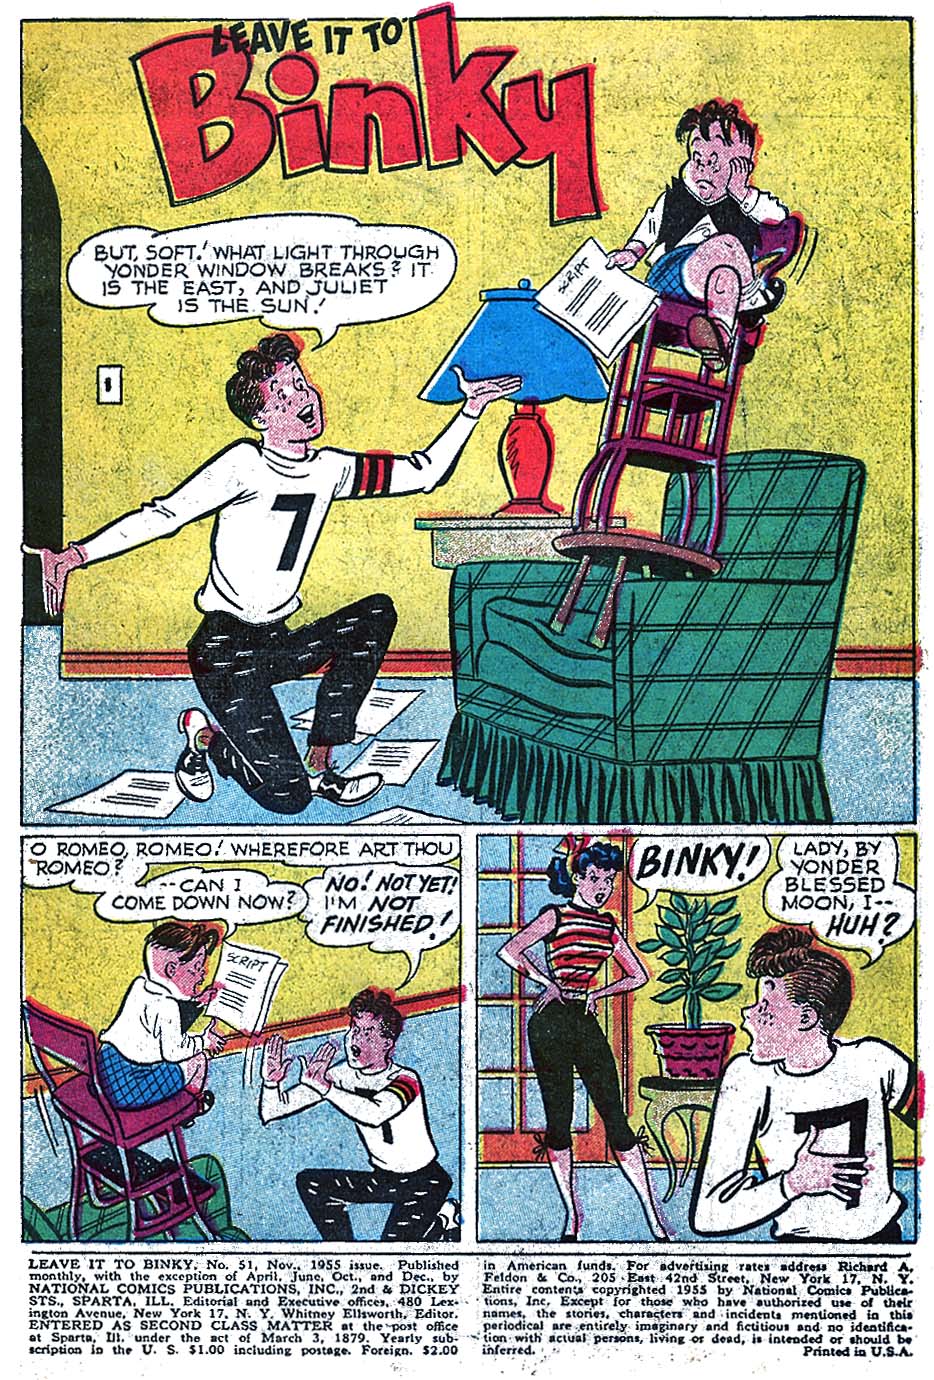 Read online Leave it to Binky comic -  Issue #51 - 3